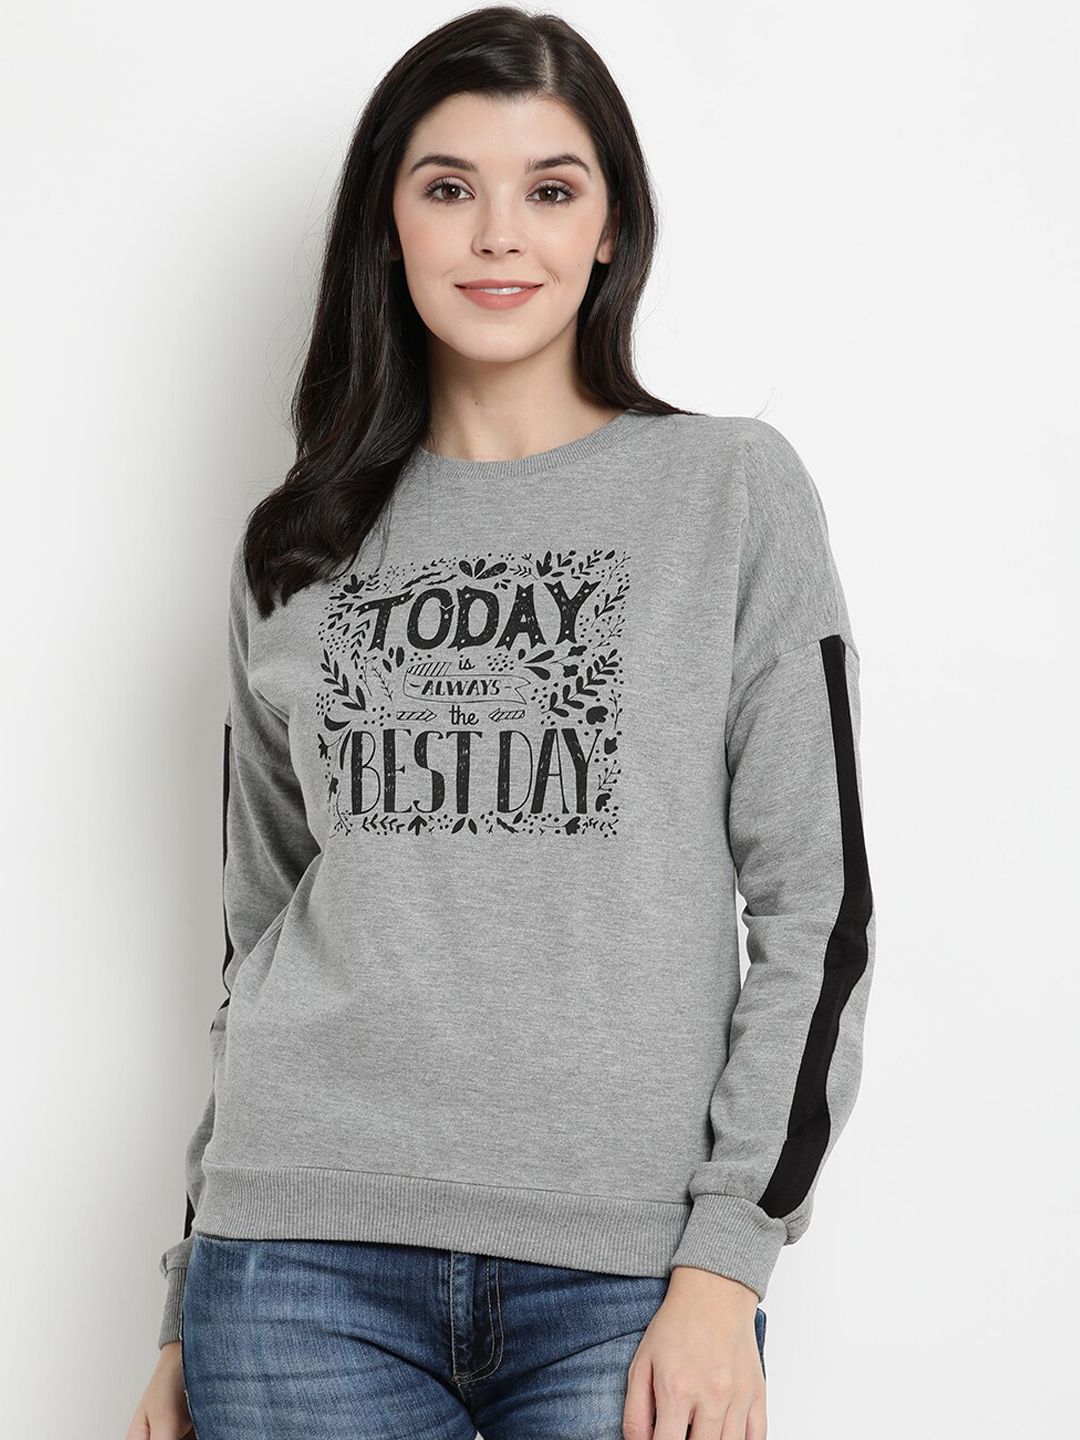 The Vanca Women Grey & Black Printed Sweatshirt Price in India